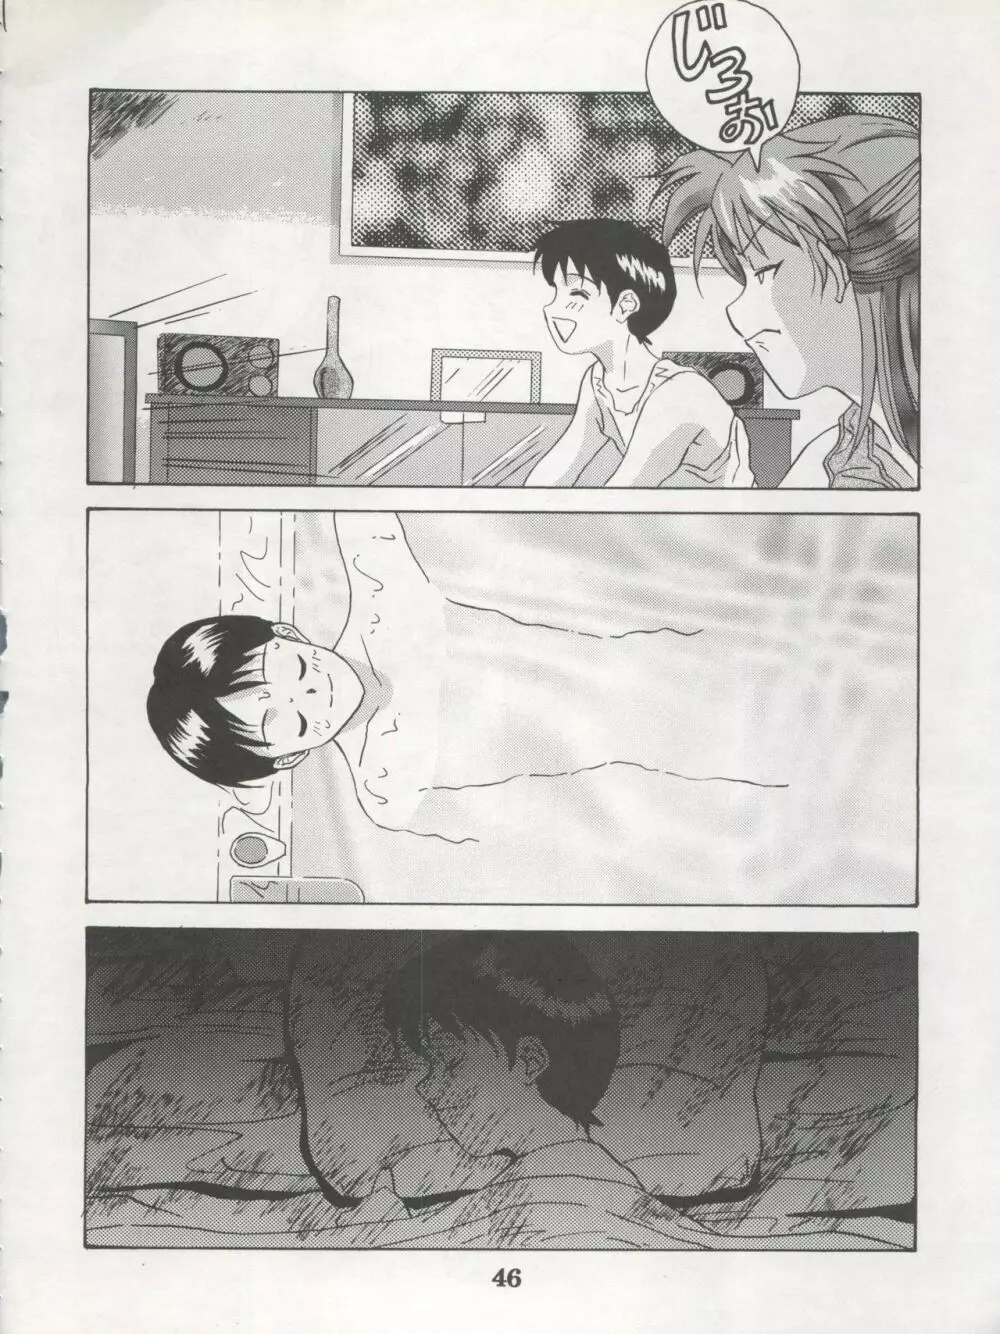 1998 SUMMER 電撃犬王 - page48